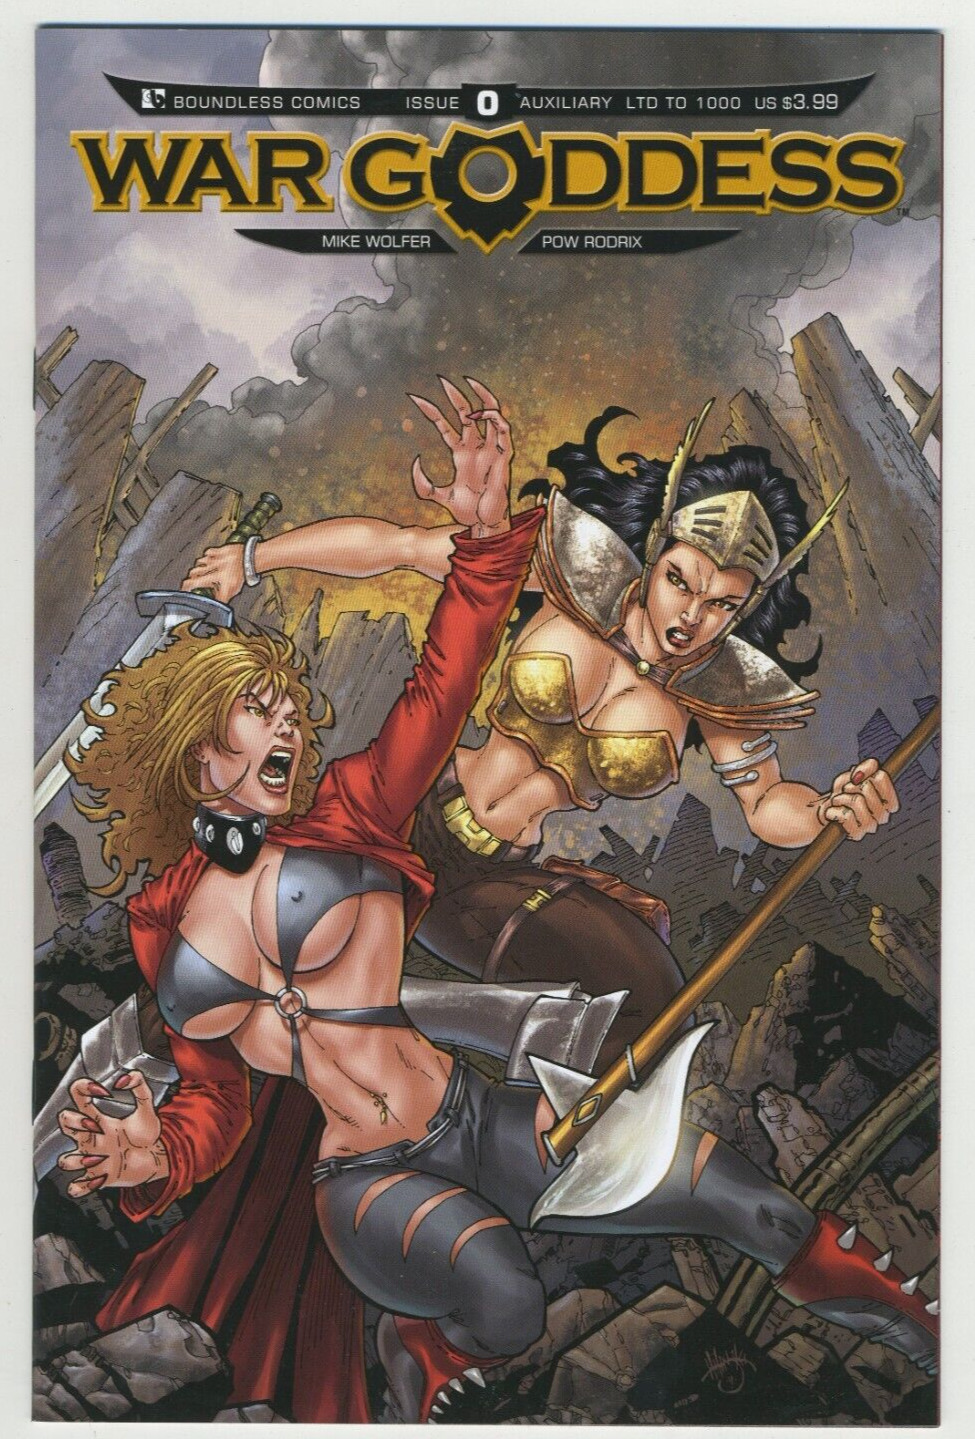 2011 Boundless Comics #0 War Goddess Clint Hilinski Auxiliary Cover